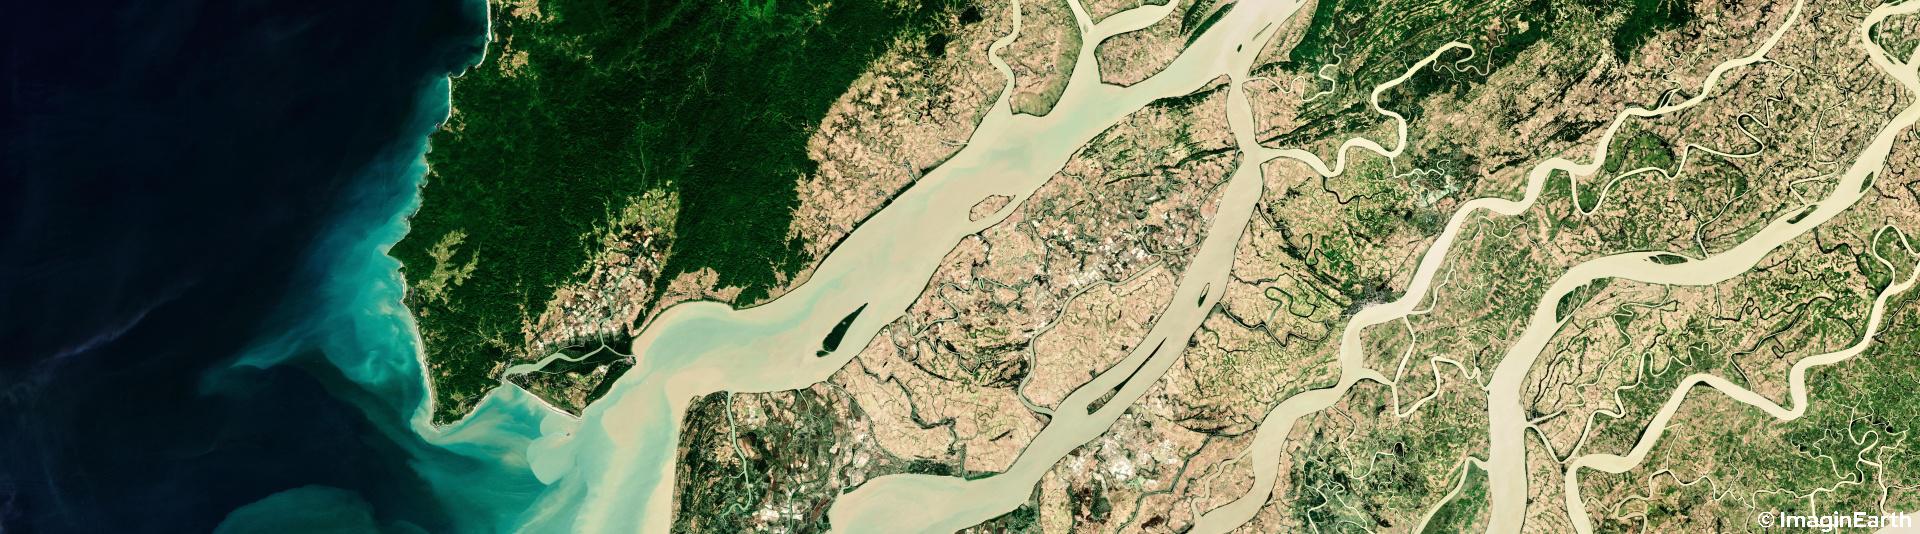 voyager en birmanie imginearth, photo satellite